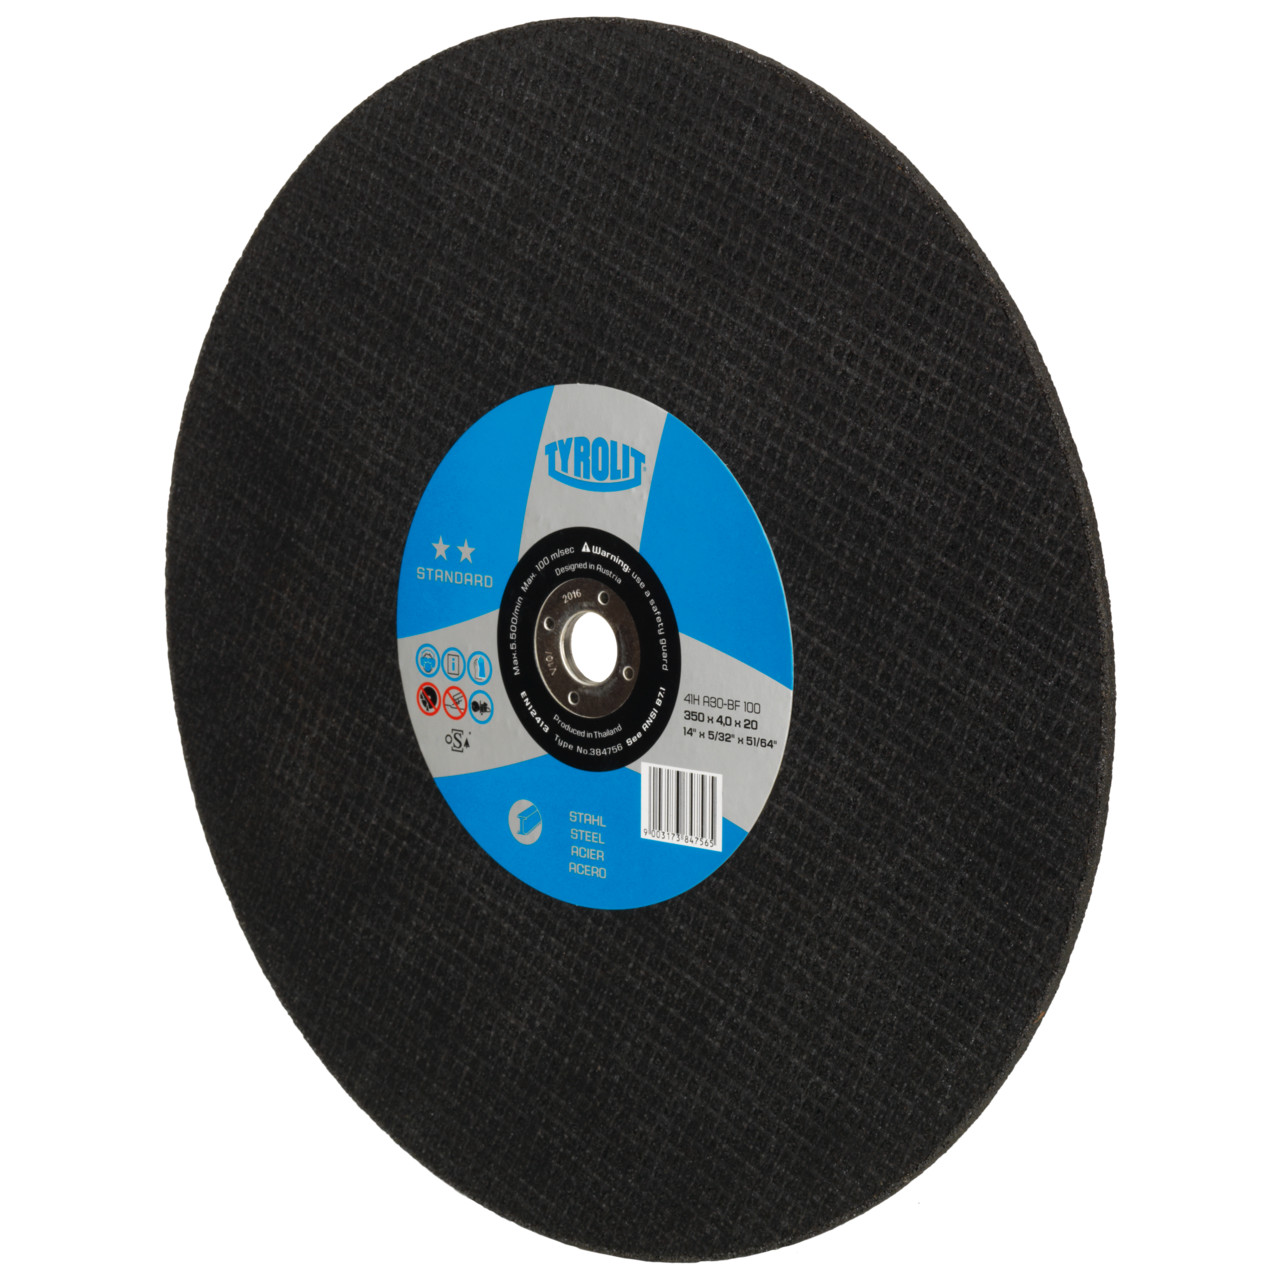 Tyrolit Cutting discs DxDxH 350x4x20 For steel, shape: 41 - straight version, Art. 384756